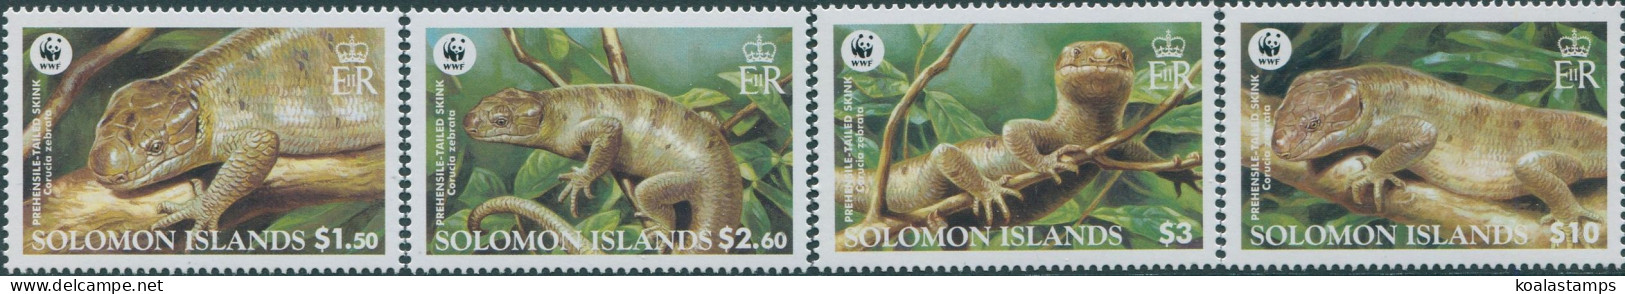 Solomon Islands 2005 SG1162-65 WWF Skink Set MNH - Solomon Islands (1978-...)